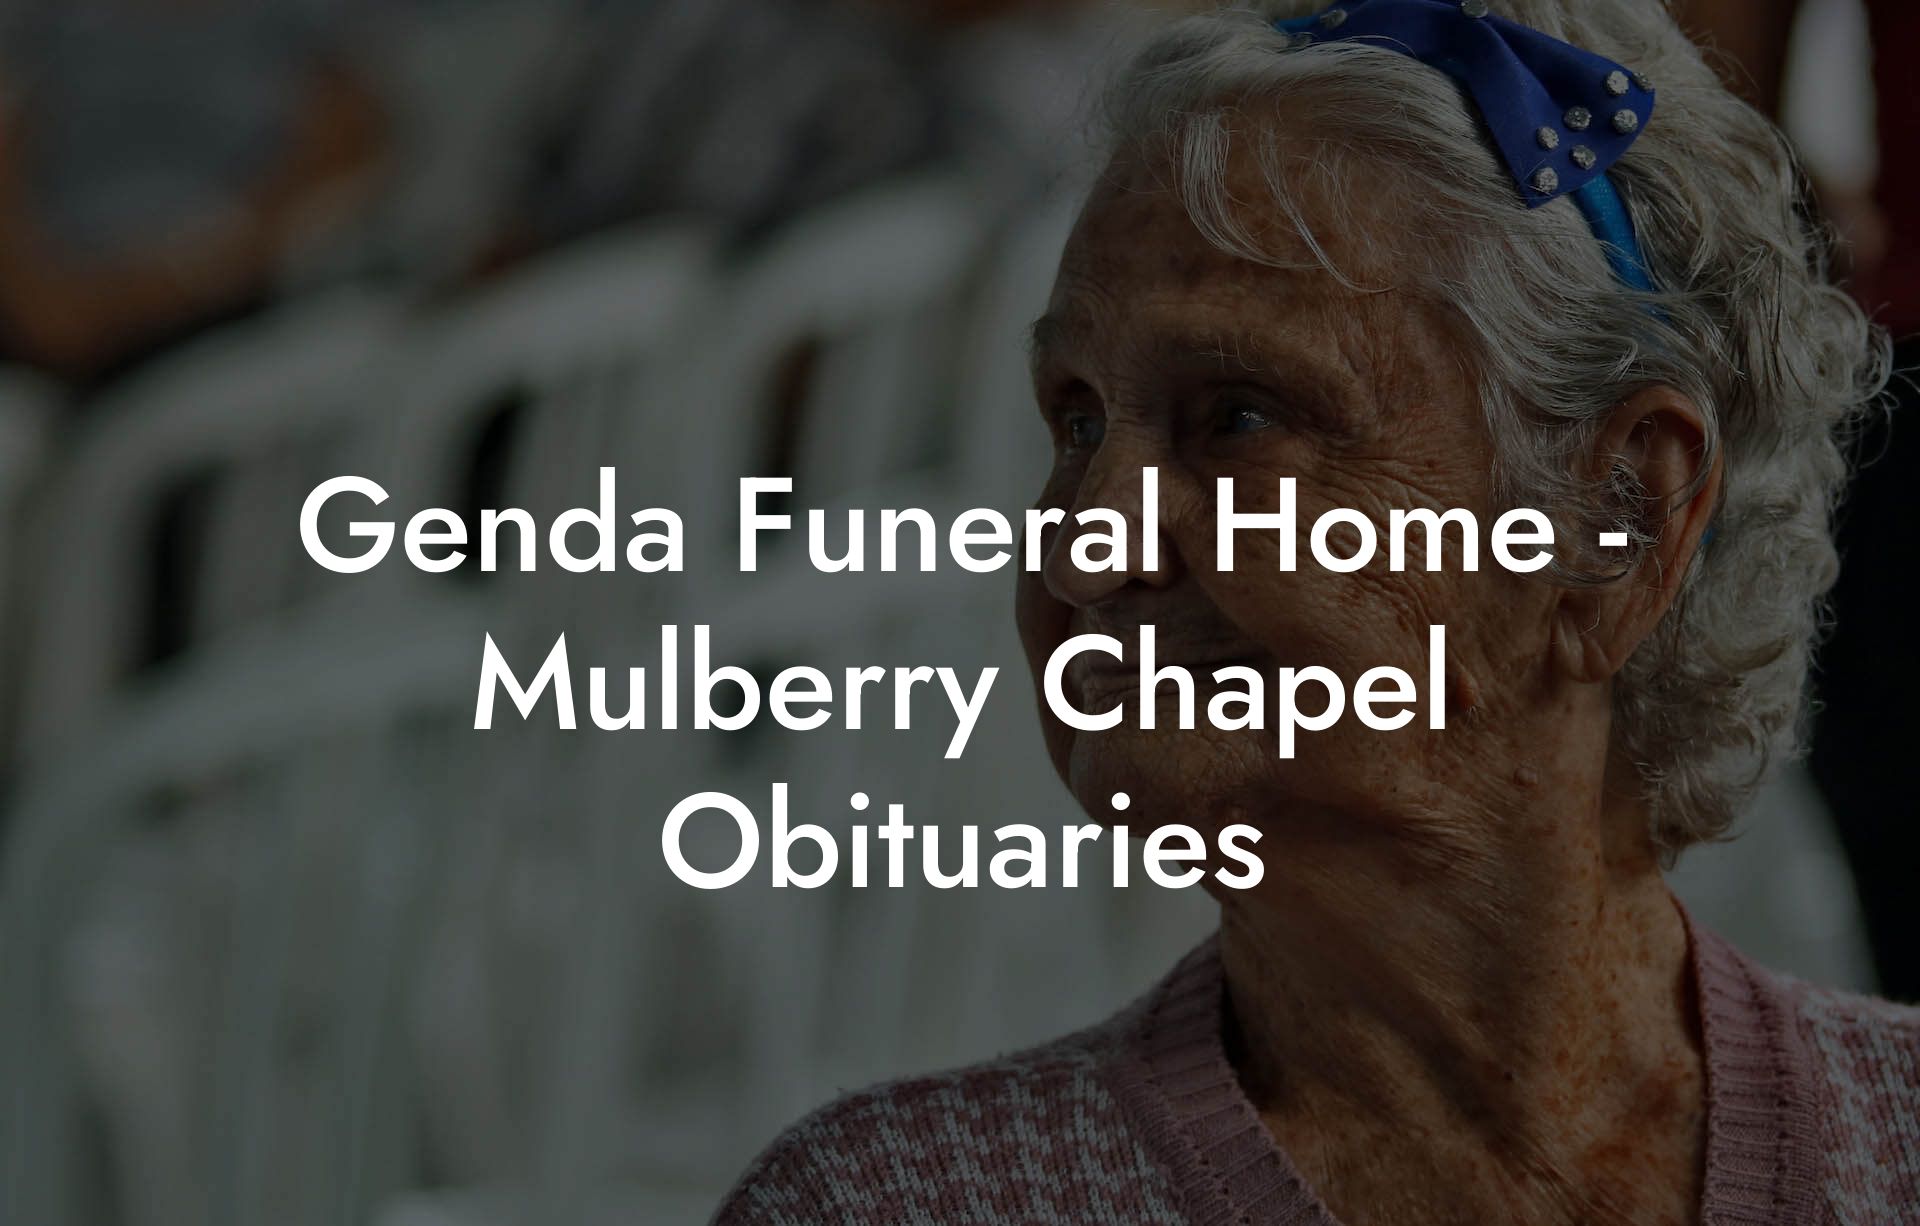 Genda Funeral Home - Mulberry Chapel Obituaries